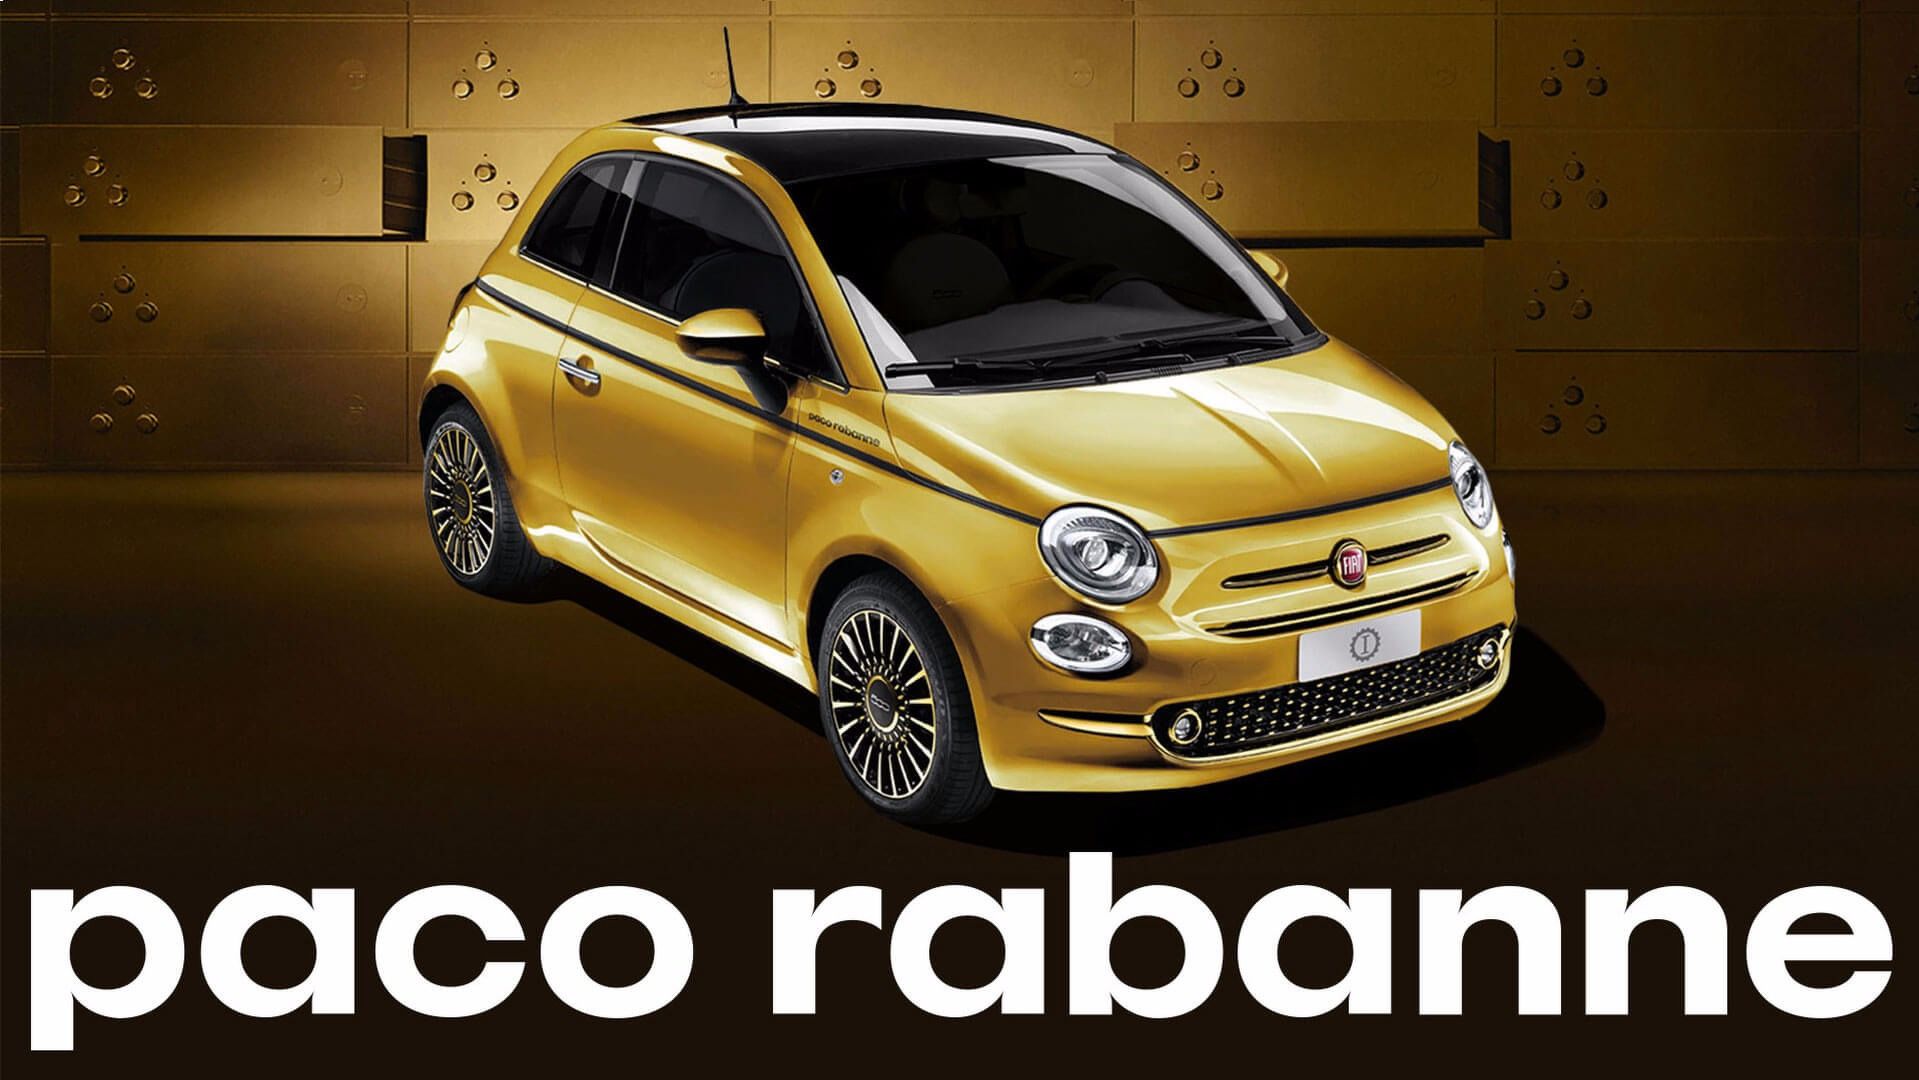 2017 Fiat 500 Paco Rabanne Edition